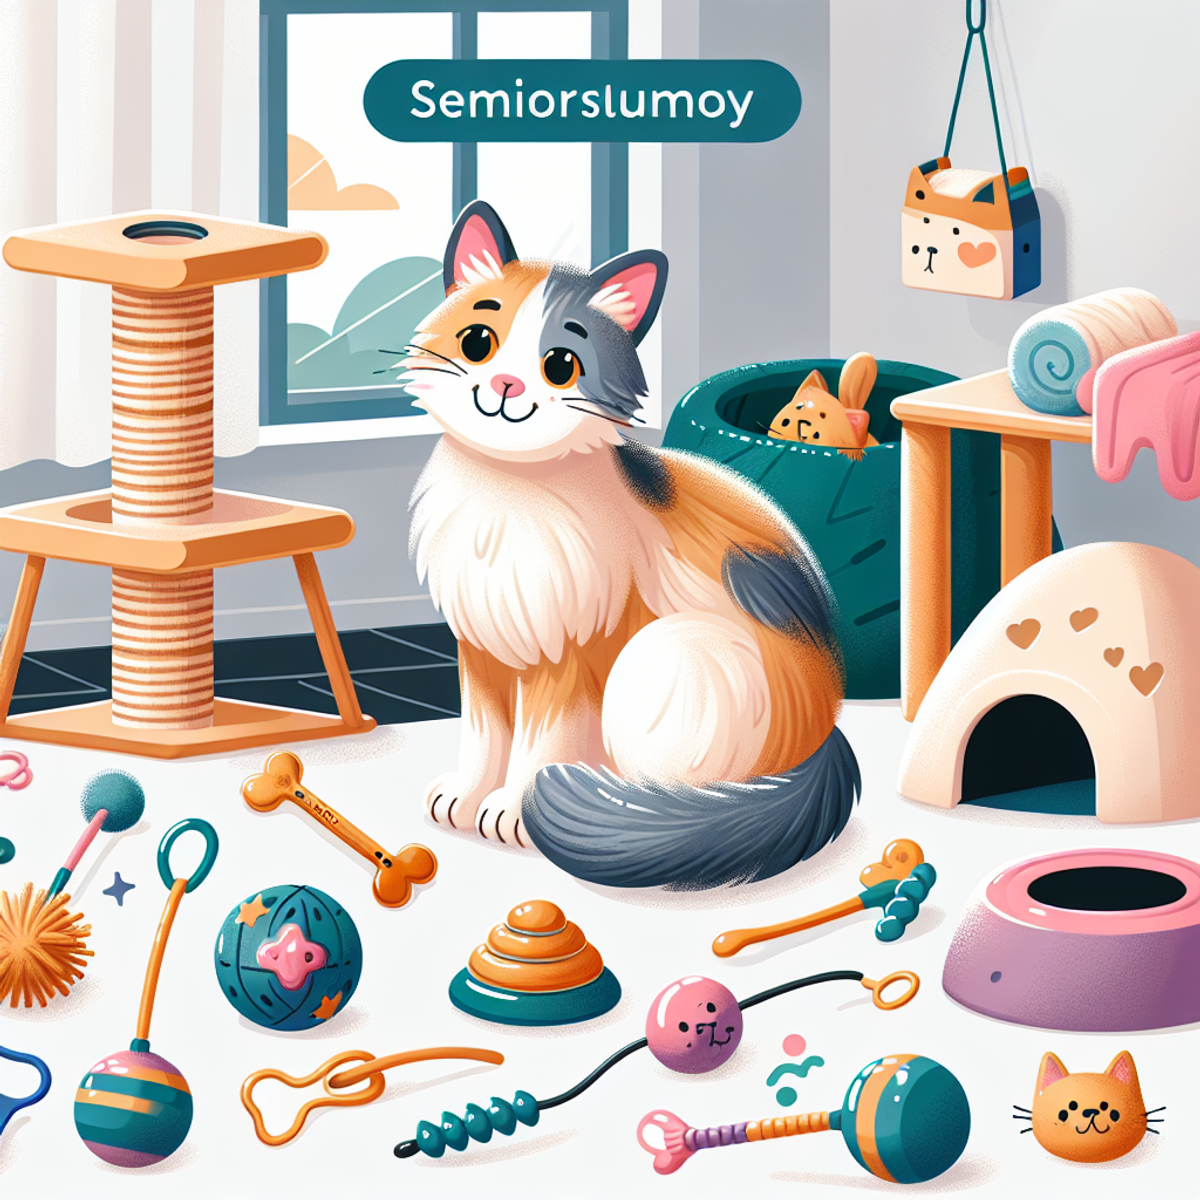 A vibrant digital art representation of a senior cat playing with various toys, symbolizing senior cat stimulation.